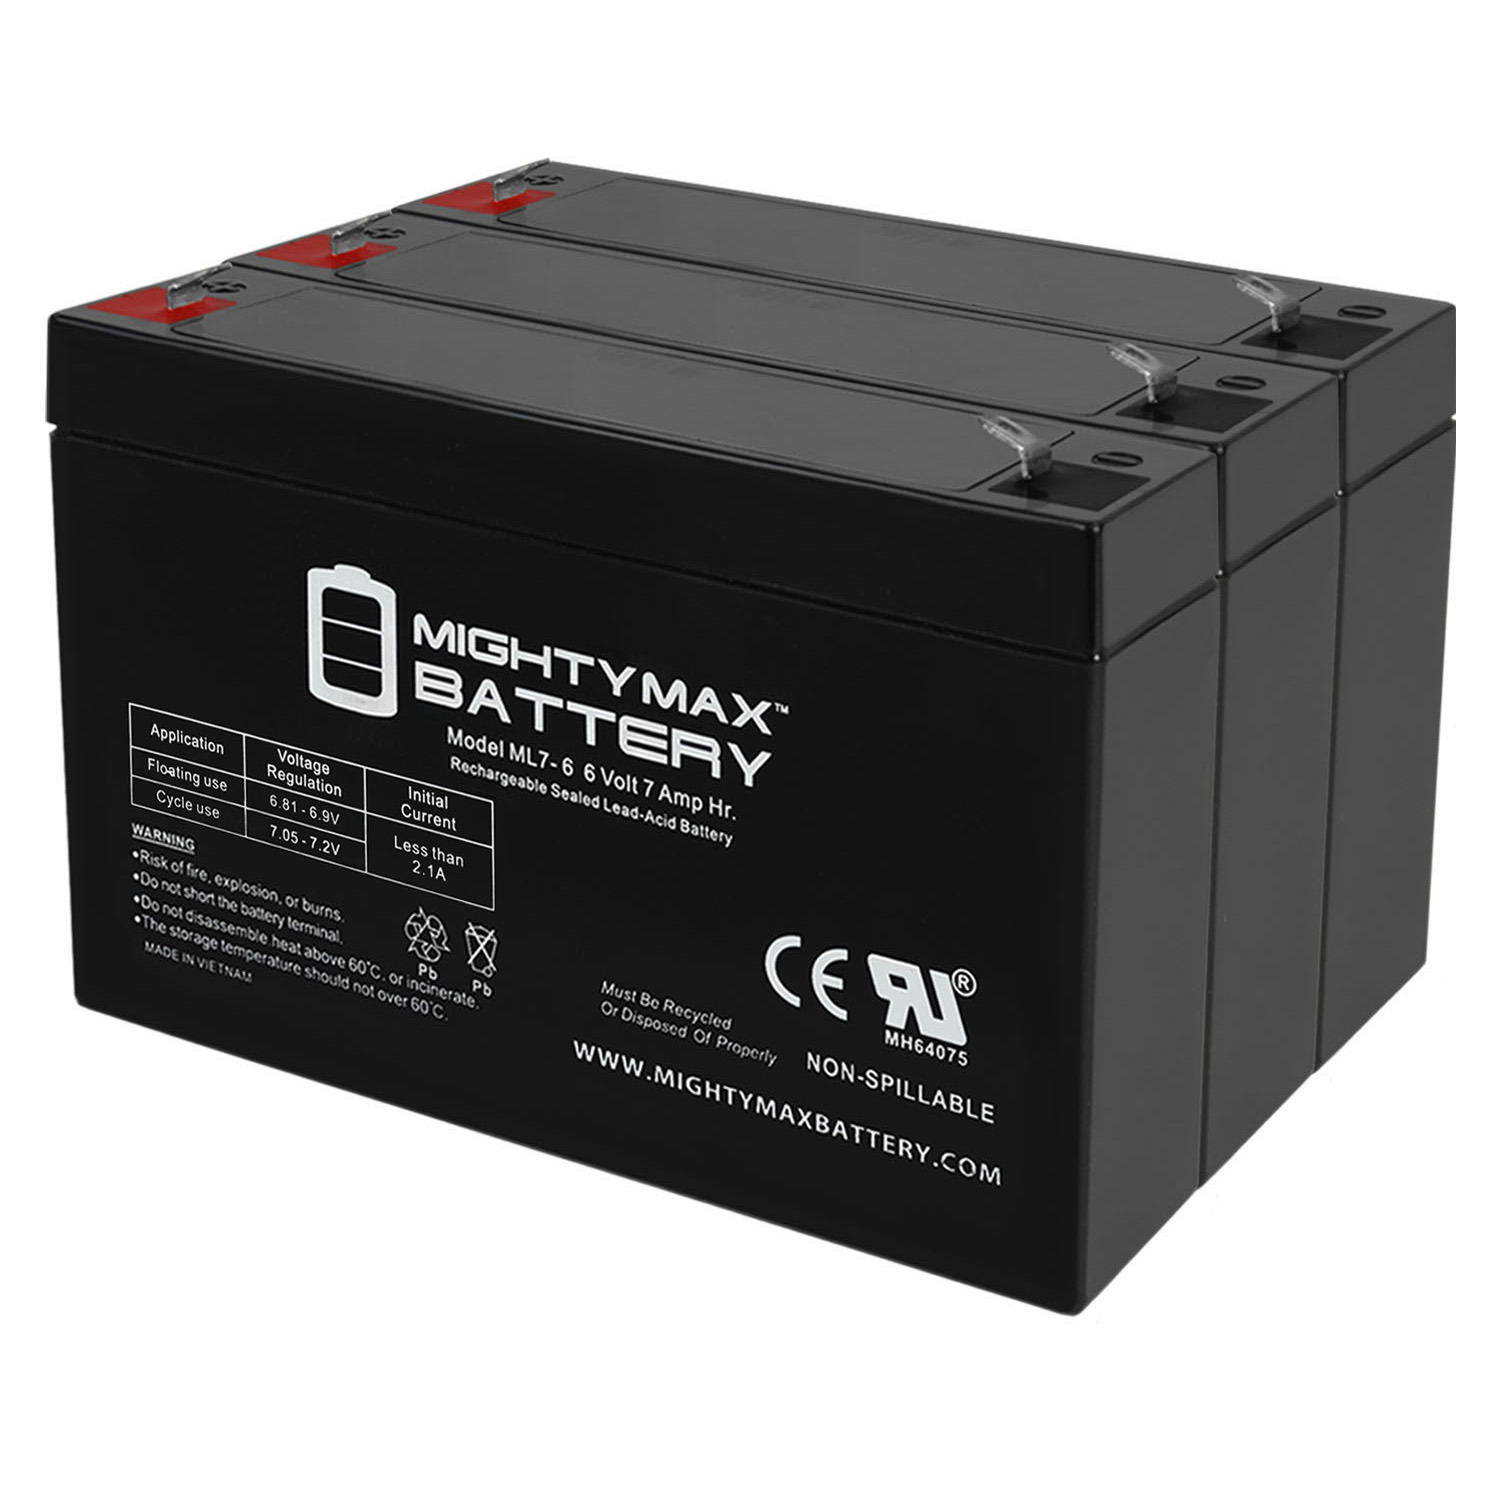 6V 7Ah SLA Replacement Battery for Diamec DMU6-8 - 3 Pack